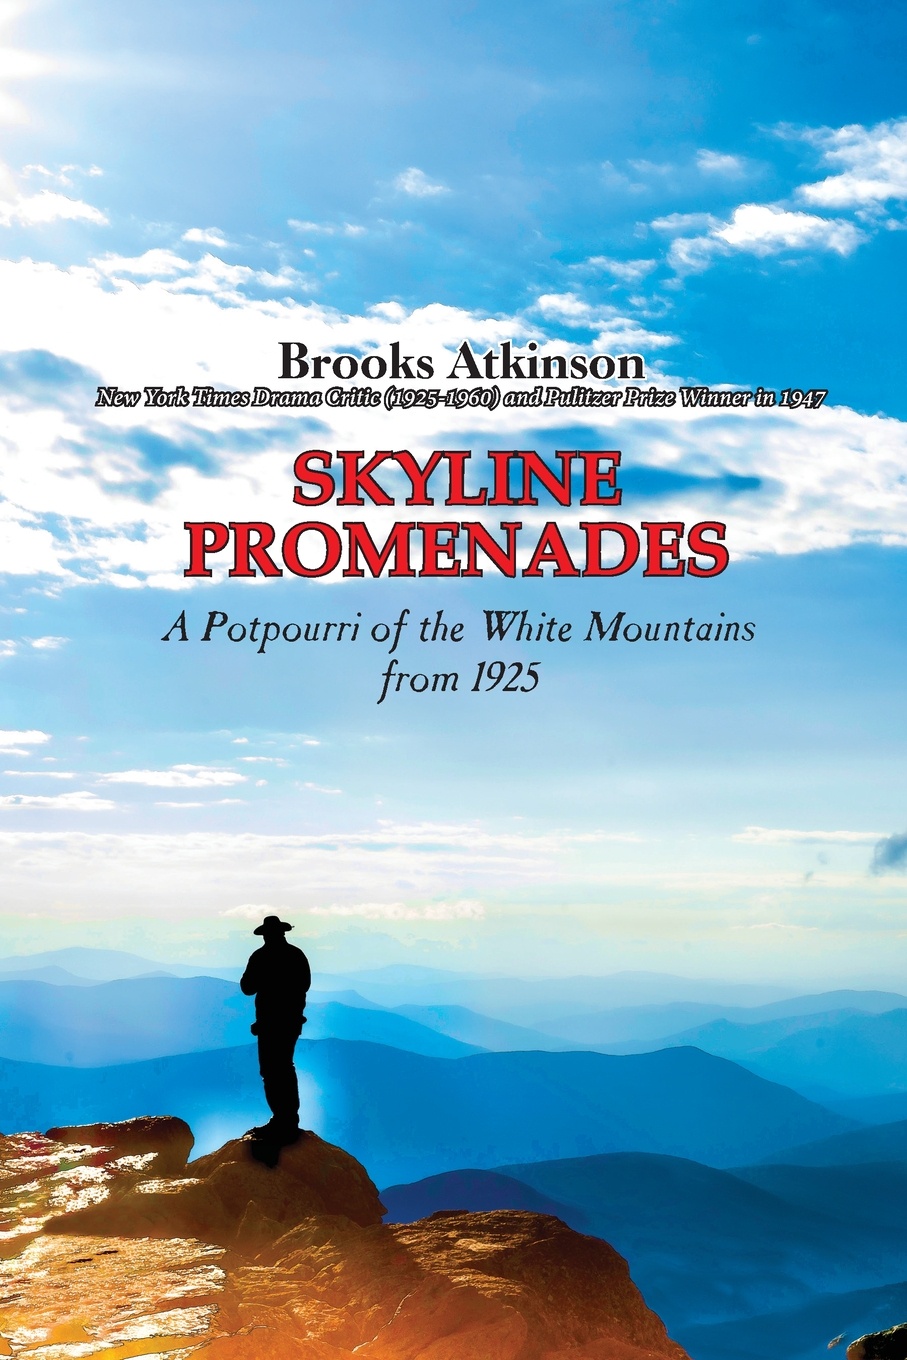 Skyline Promenades. A Potpourri of the White Mountains from 1925